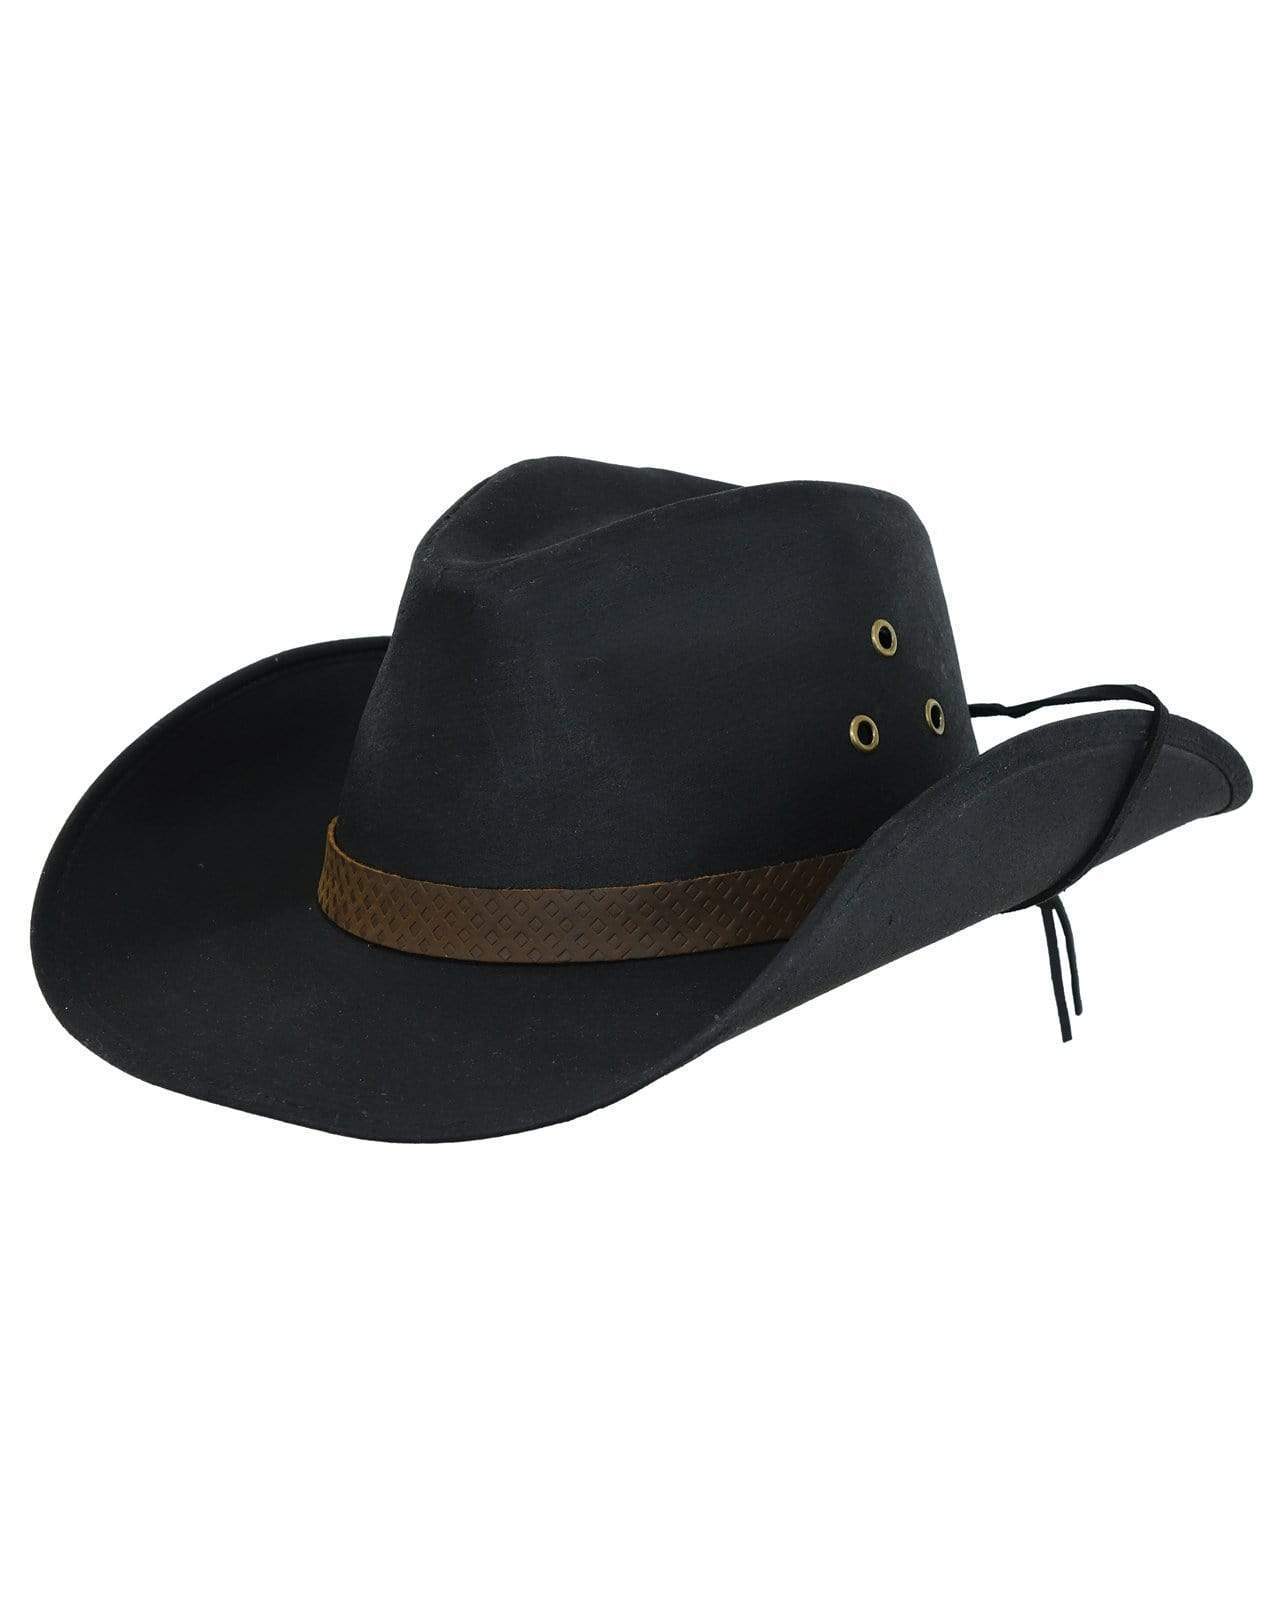 Buy Trapper Hat online